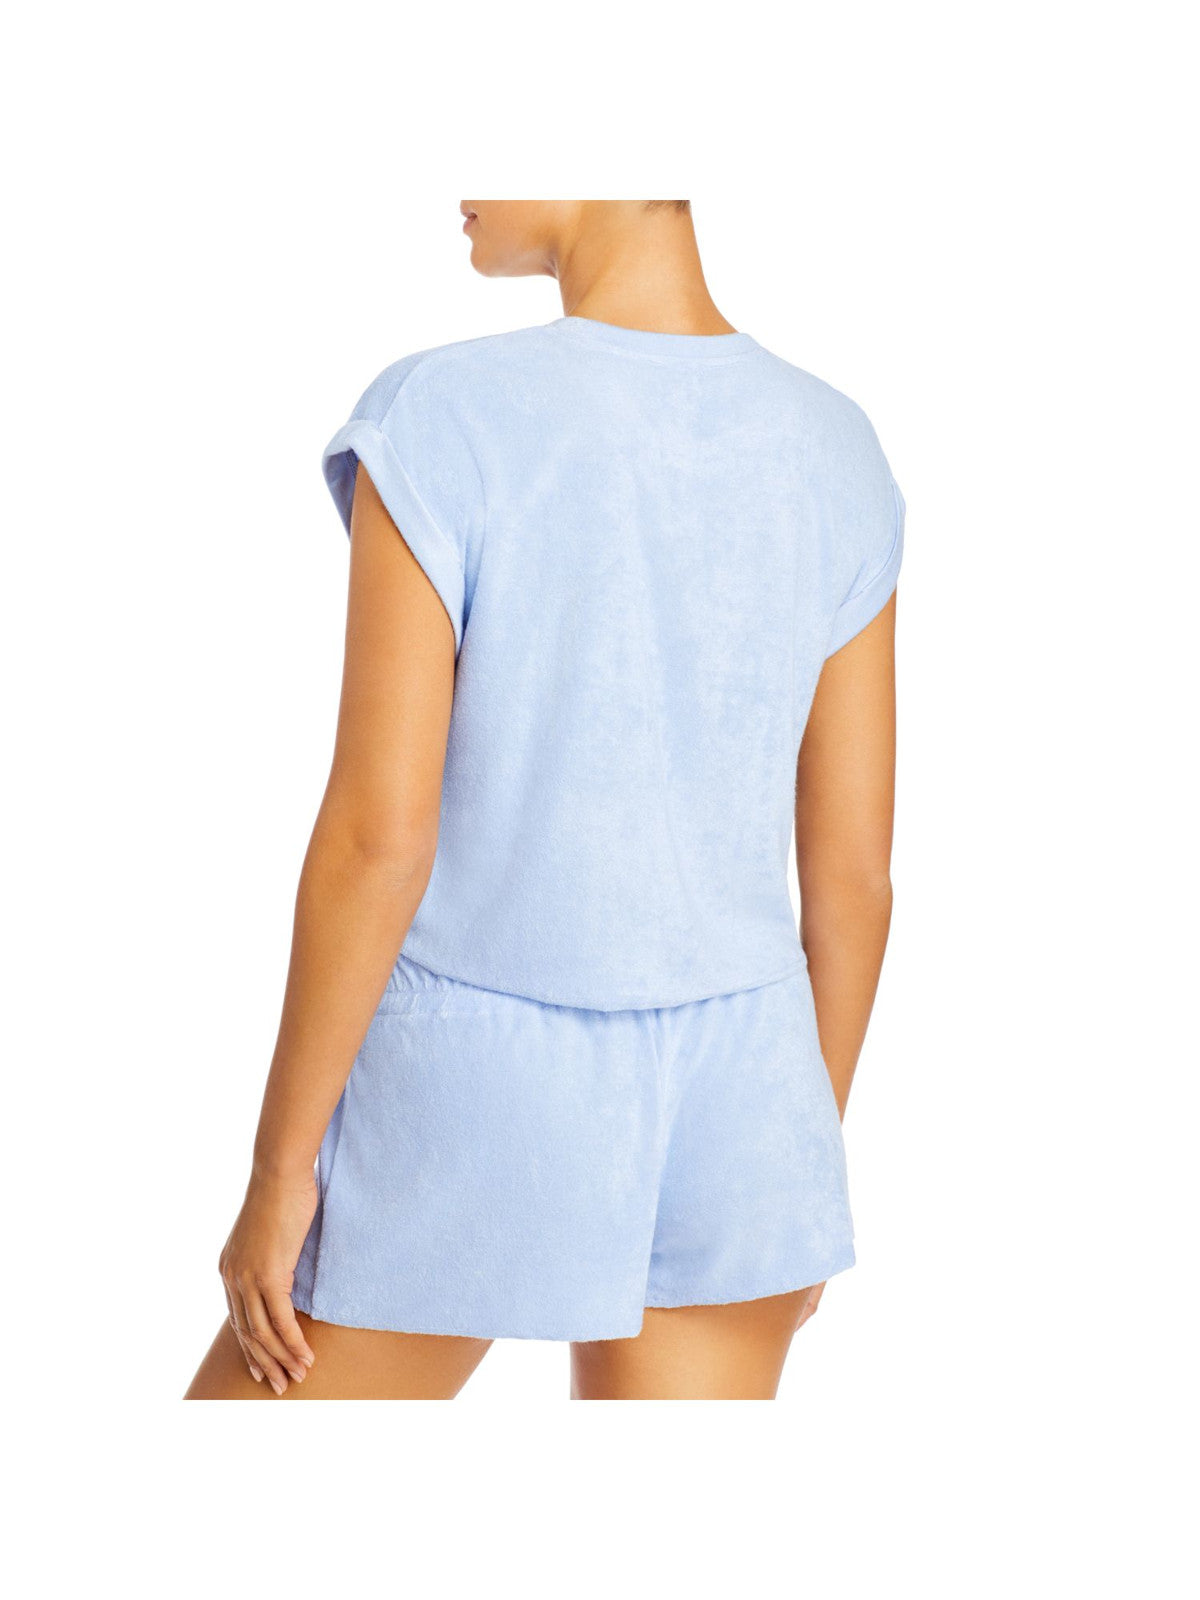 HONEYDEW Womens Blue Elastic Band T-Shirt Top and Shorts XL